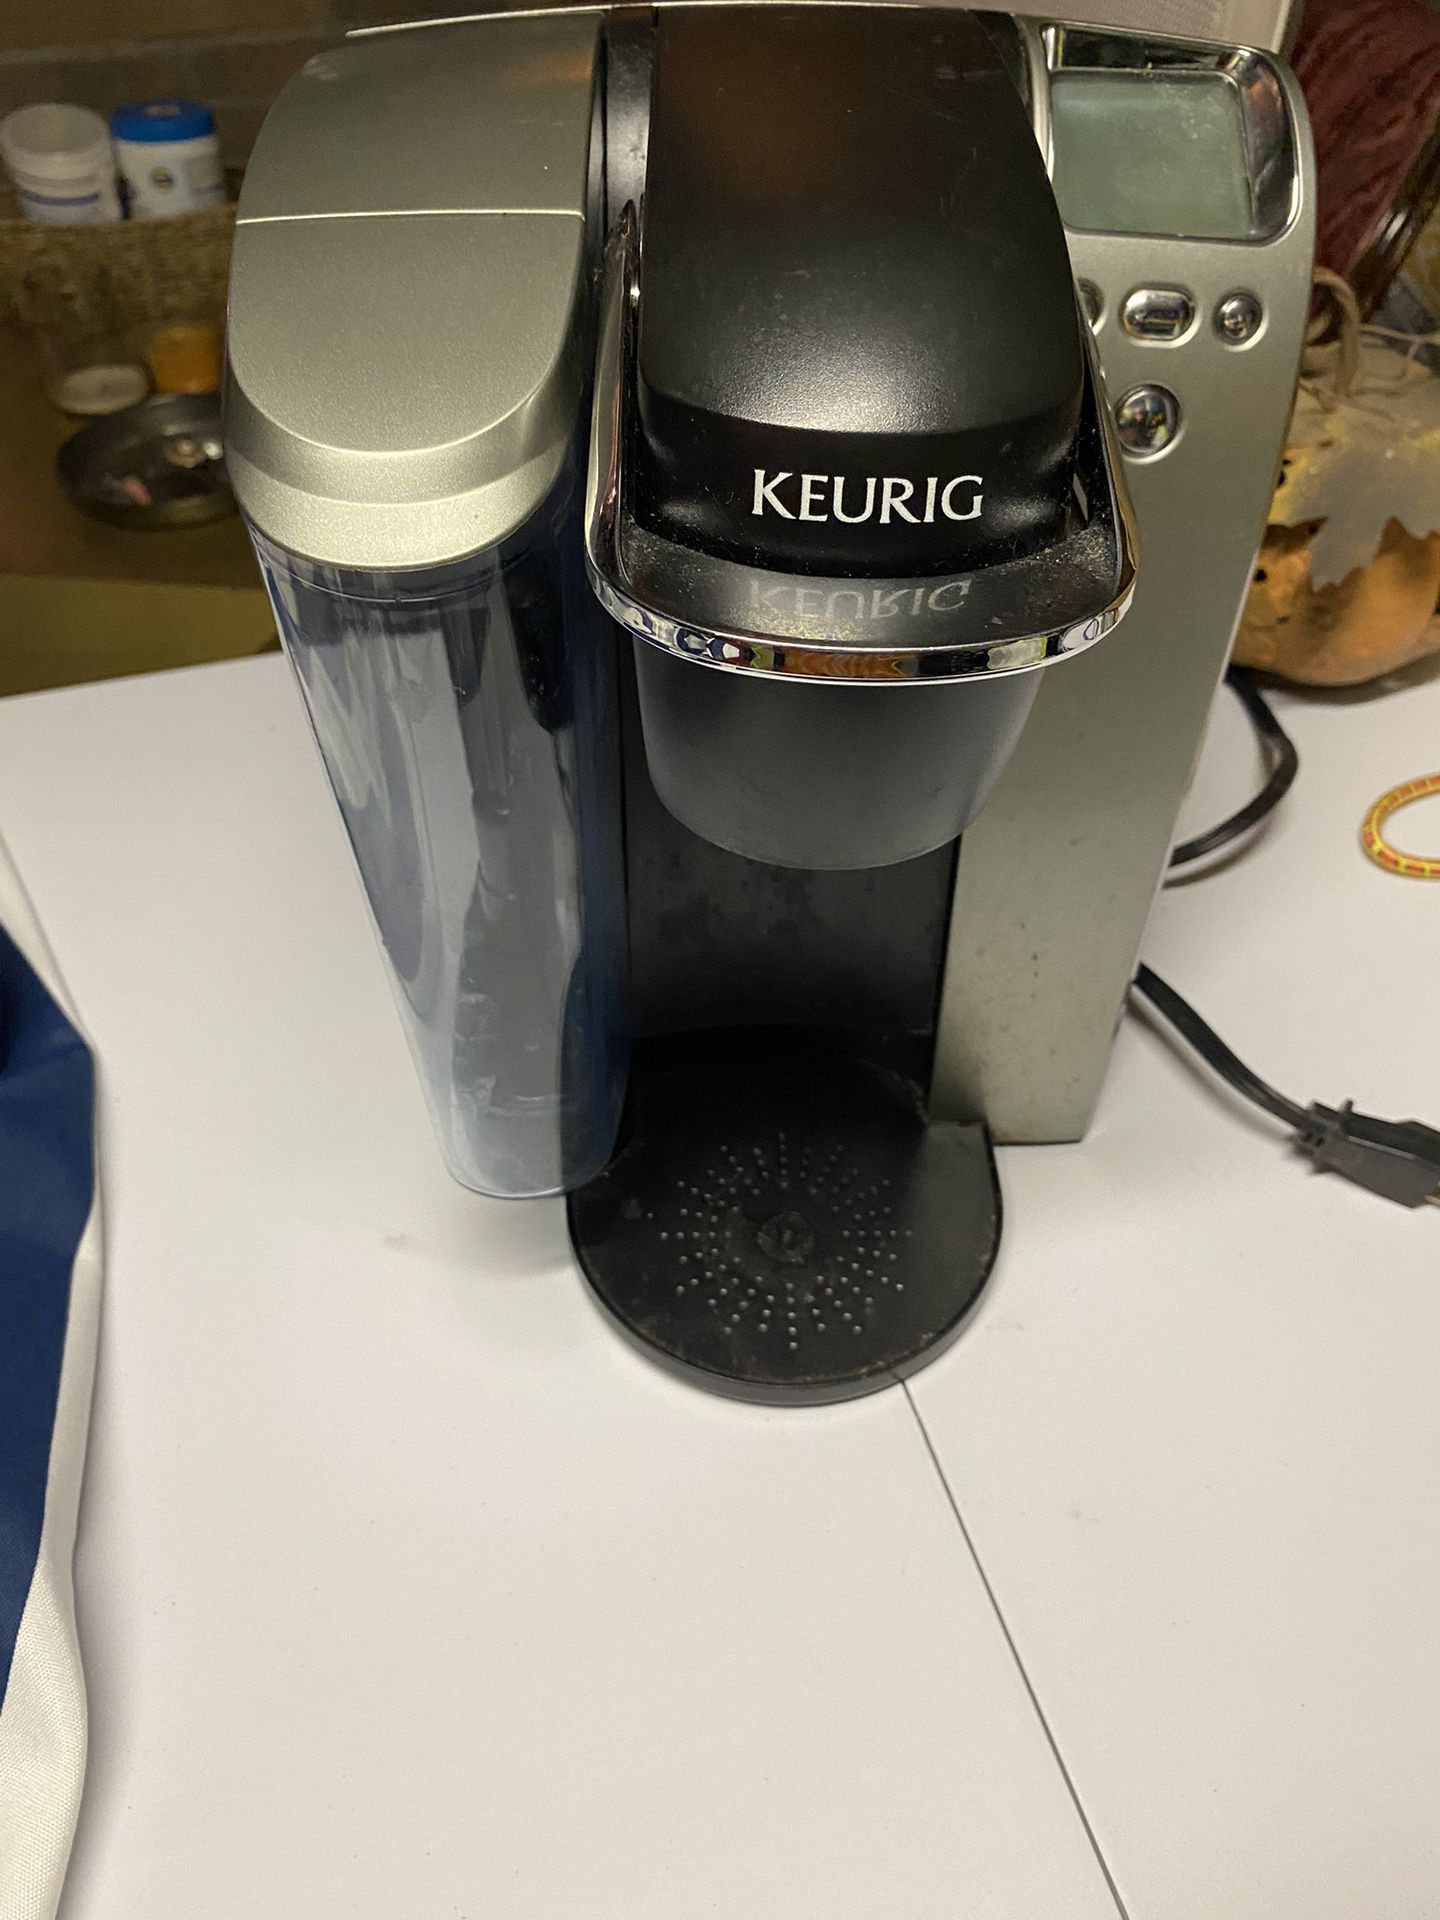 Keurig Coffee Maker Needs A Part